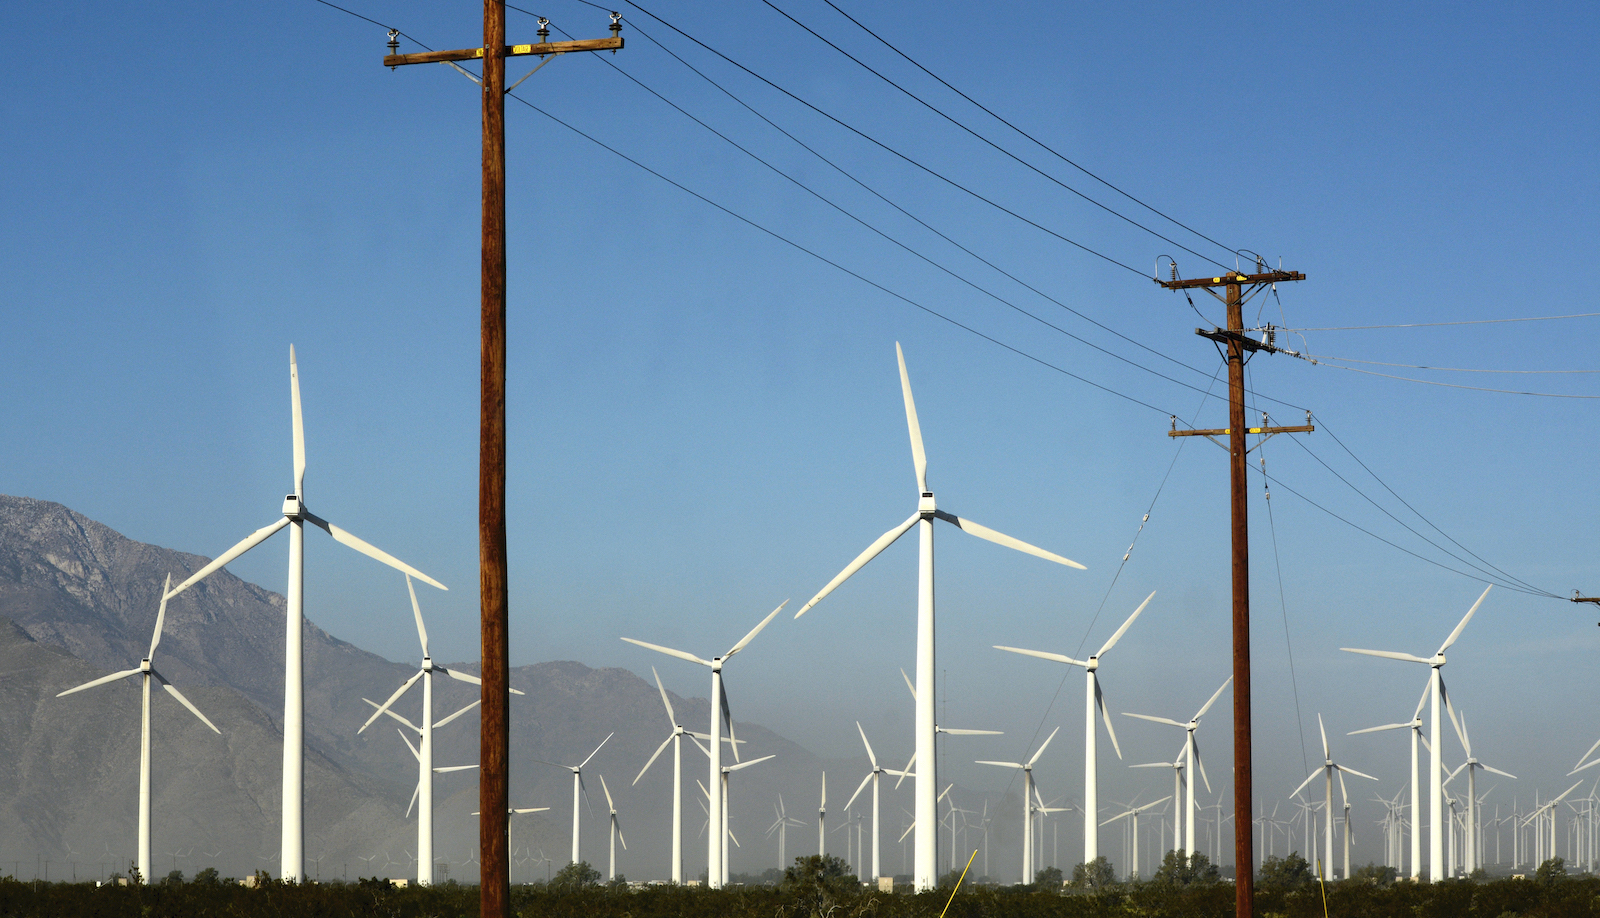 Wind turbines located near transmission lines